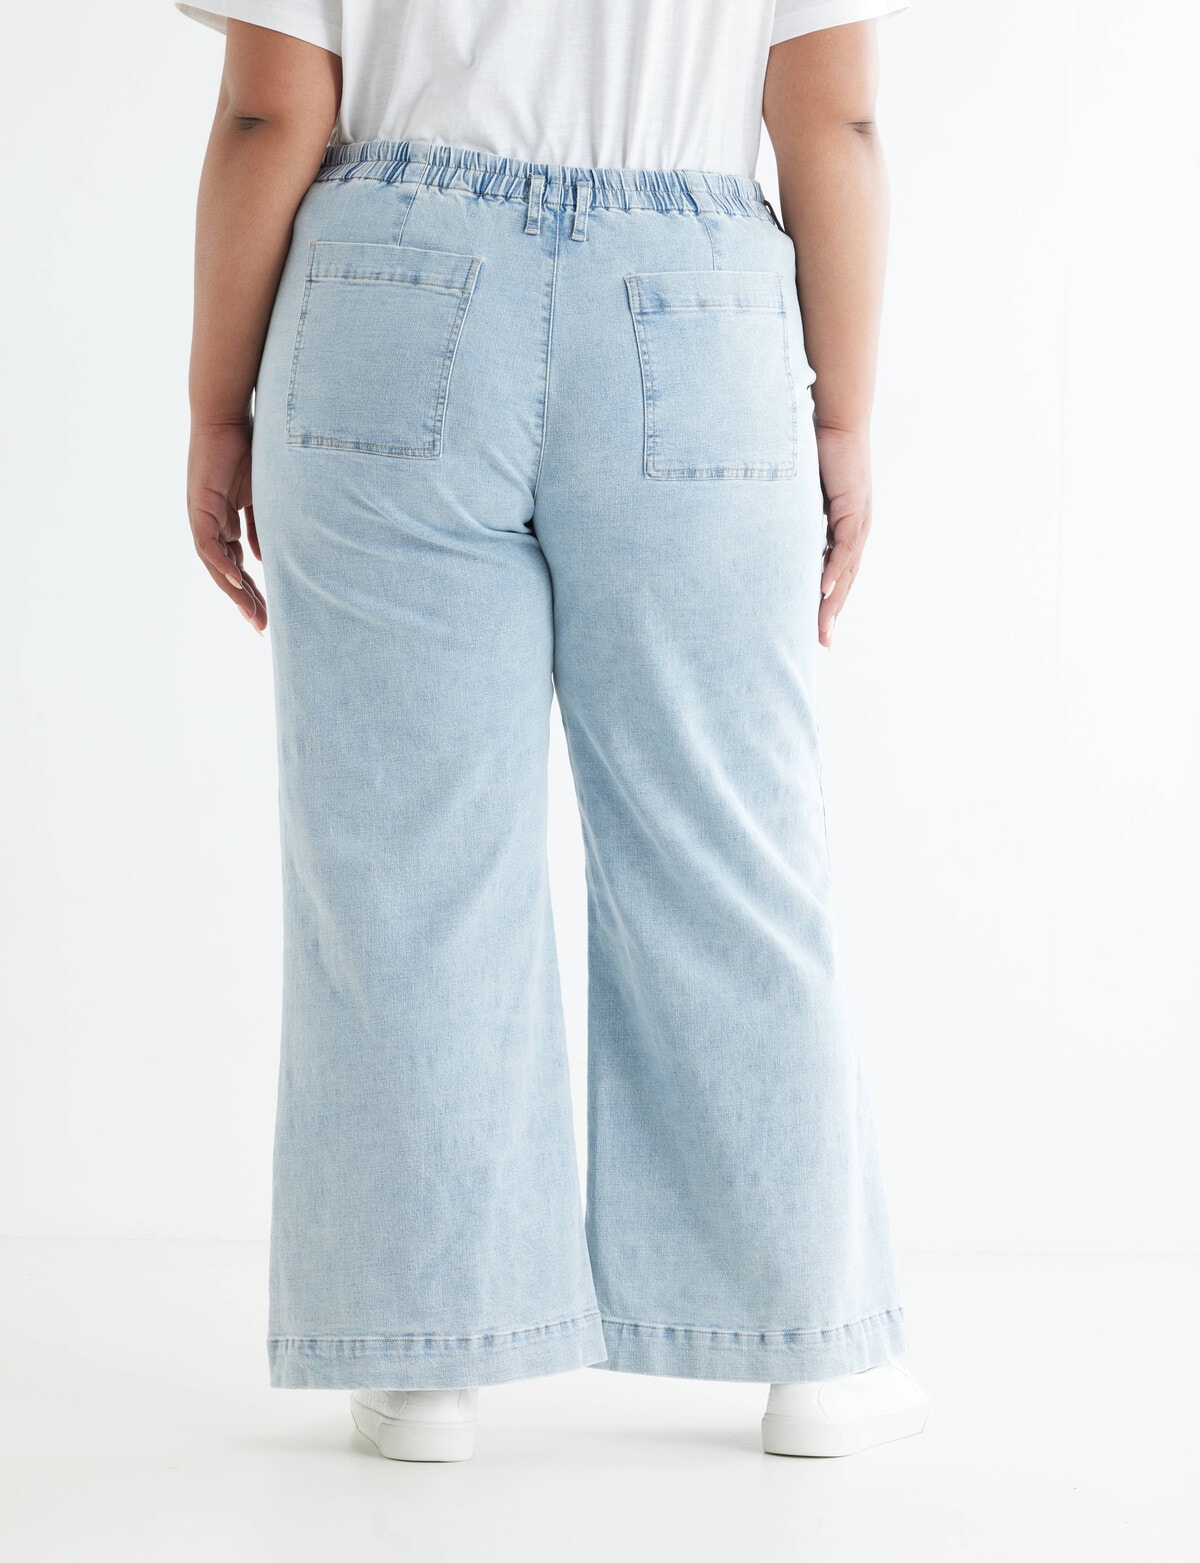 Denim Republic Curve Denim 70's Flare Jean, Light Wash - Jeans